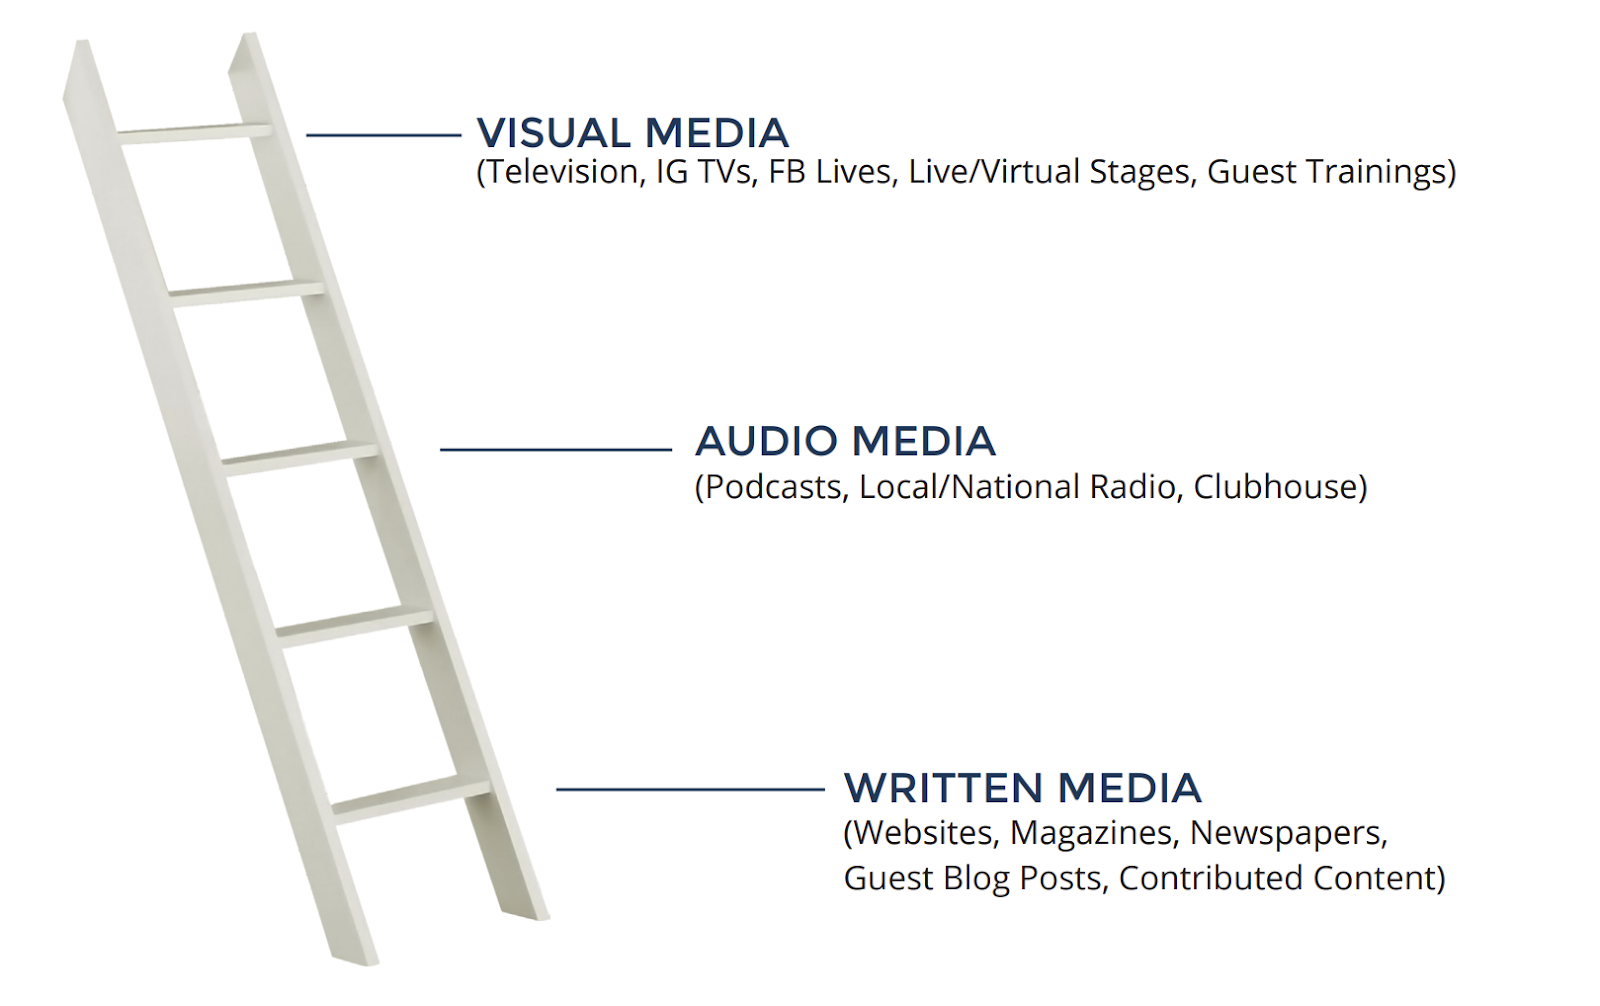 Ladder of publicity